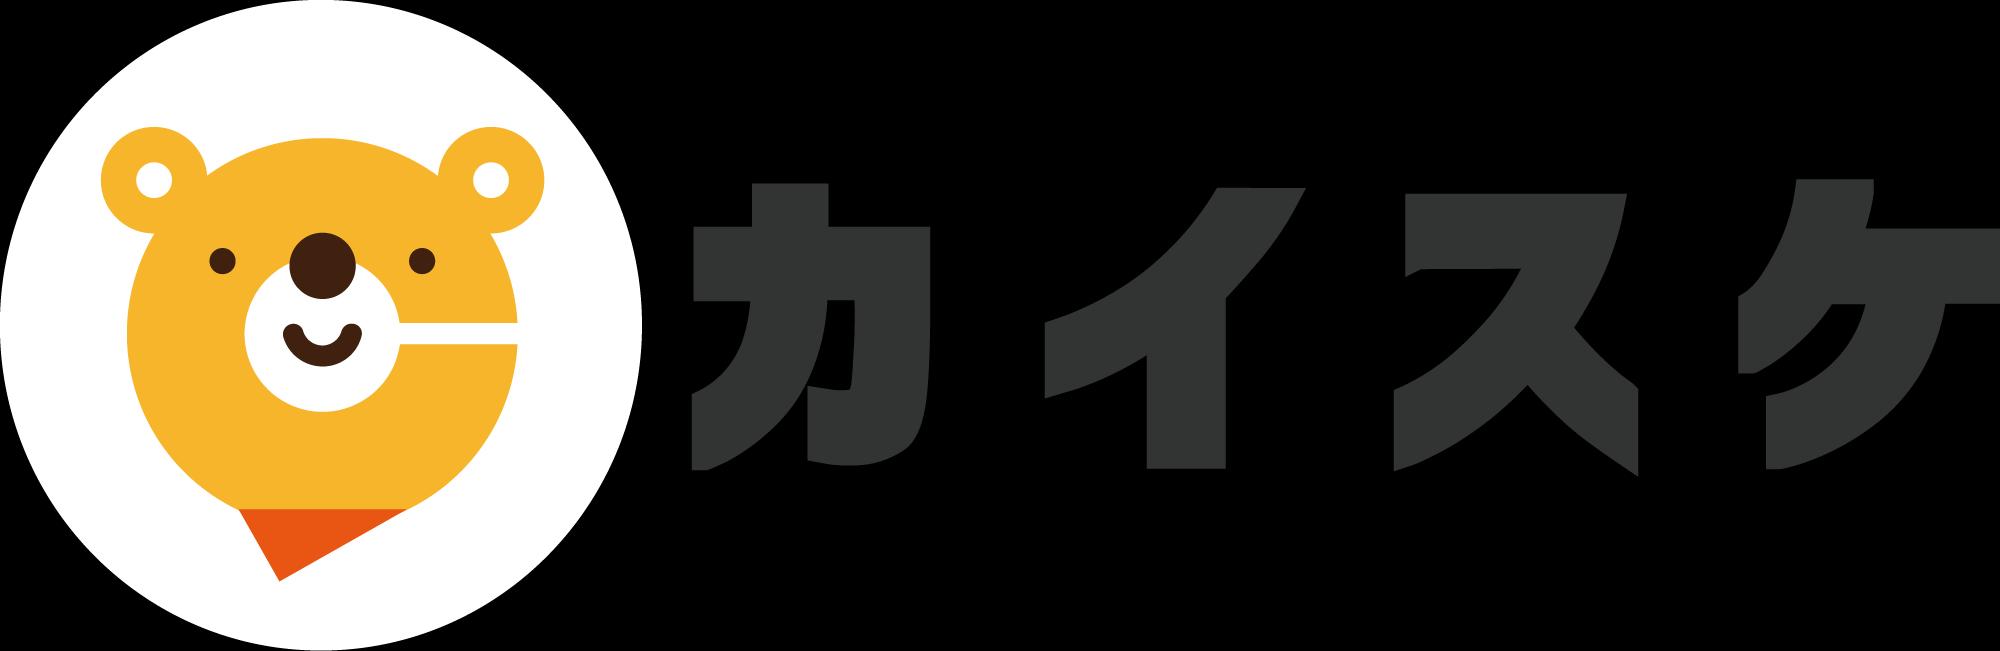 CaiTech (カイテク)_logo